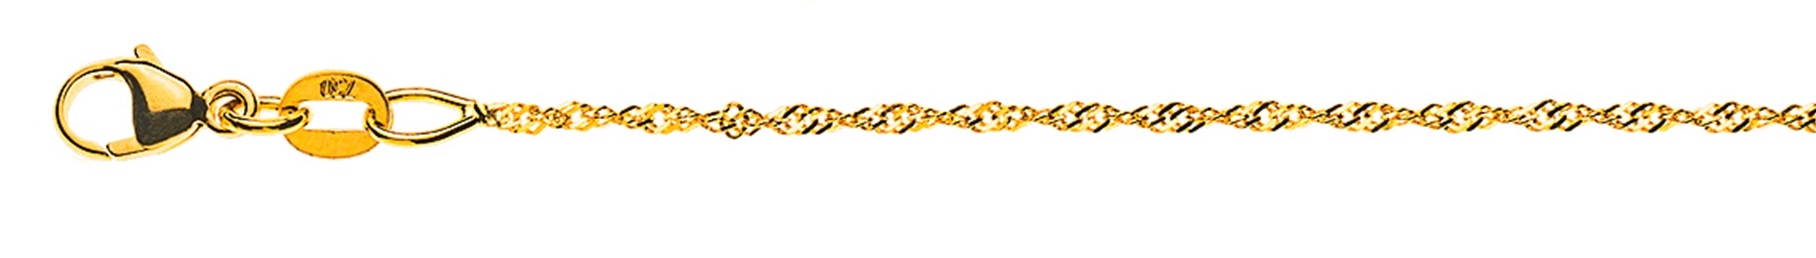 AURONOS Style Necklace Yellow Gold 9K Singapore Chain 42cm 1.2mm